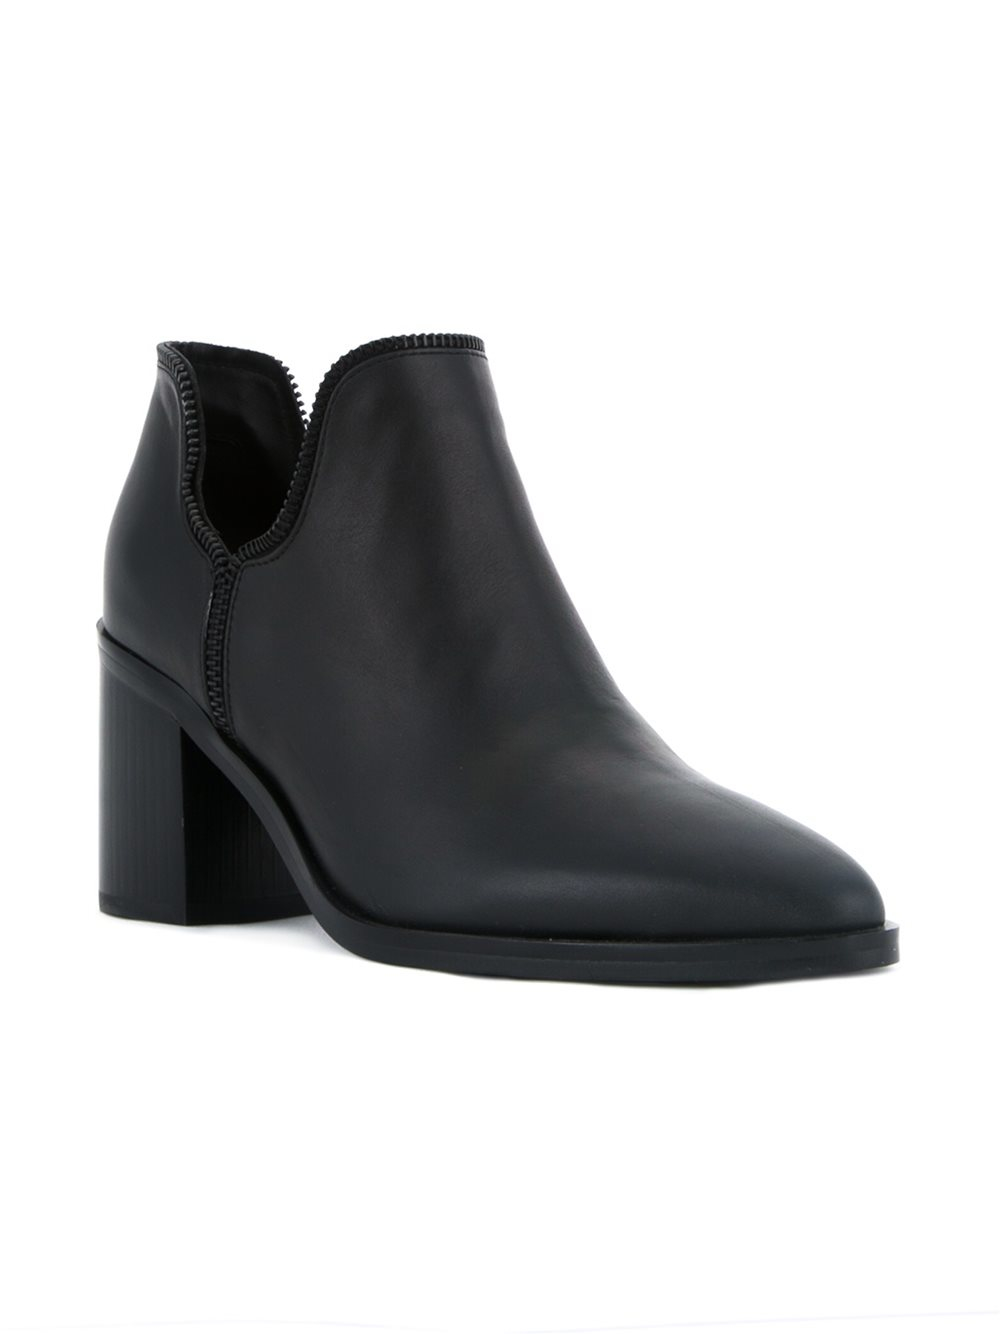 Lyst - Senso 'huntley Ii' Ankle Boots in Black